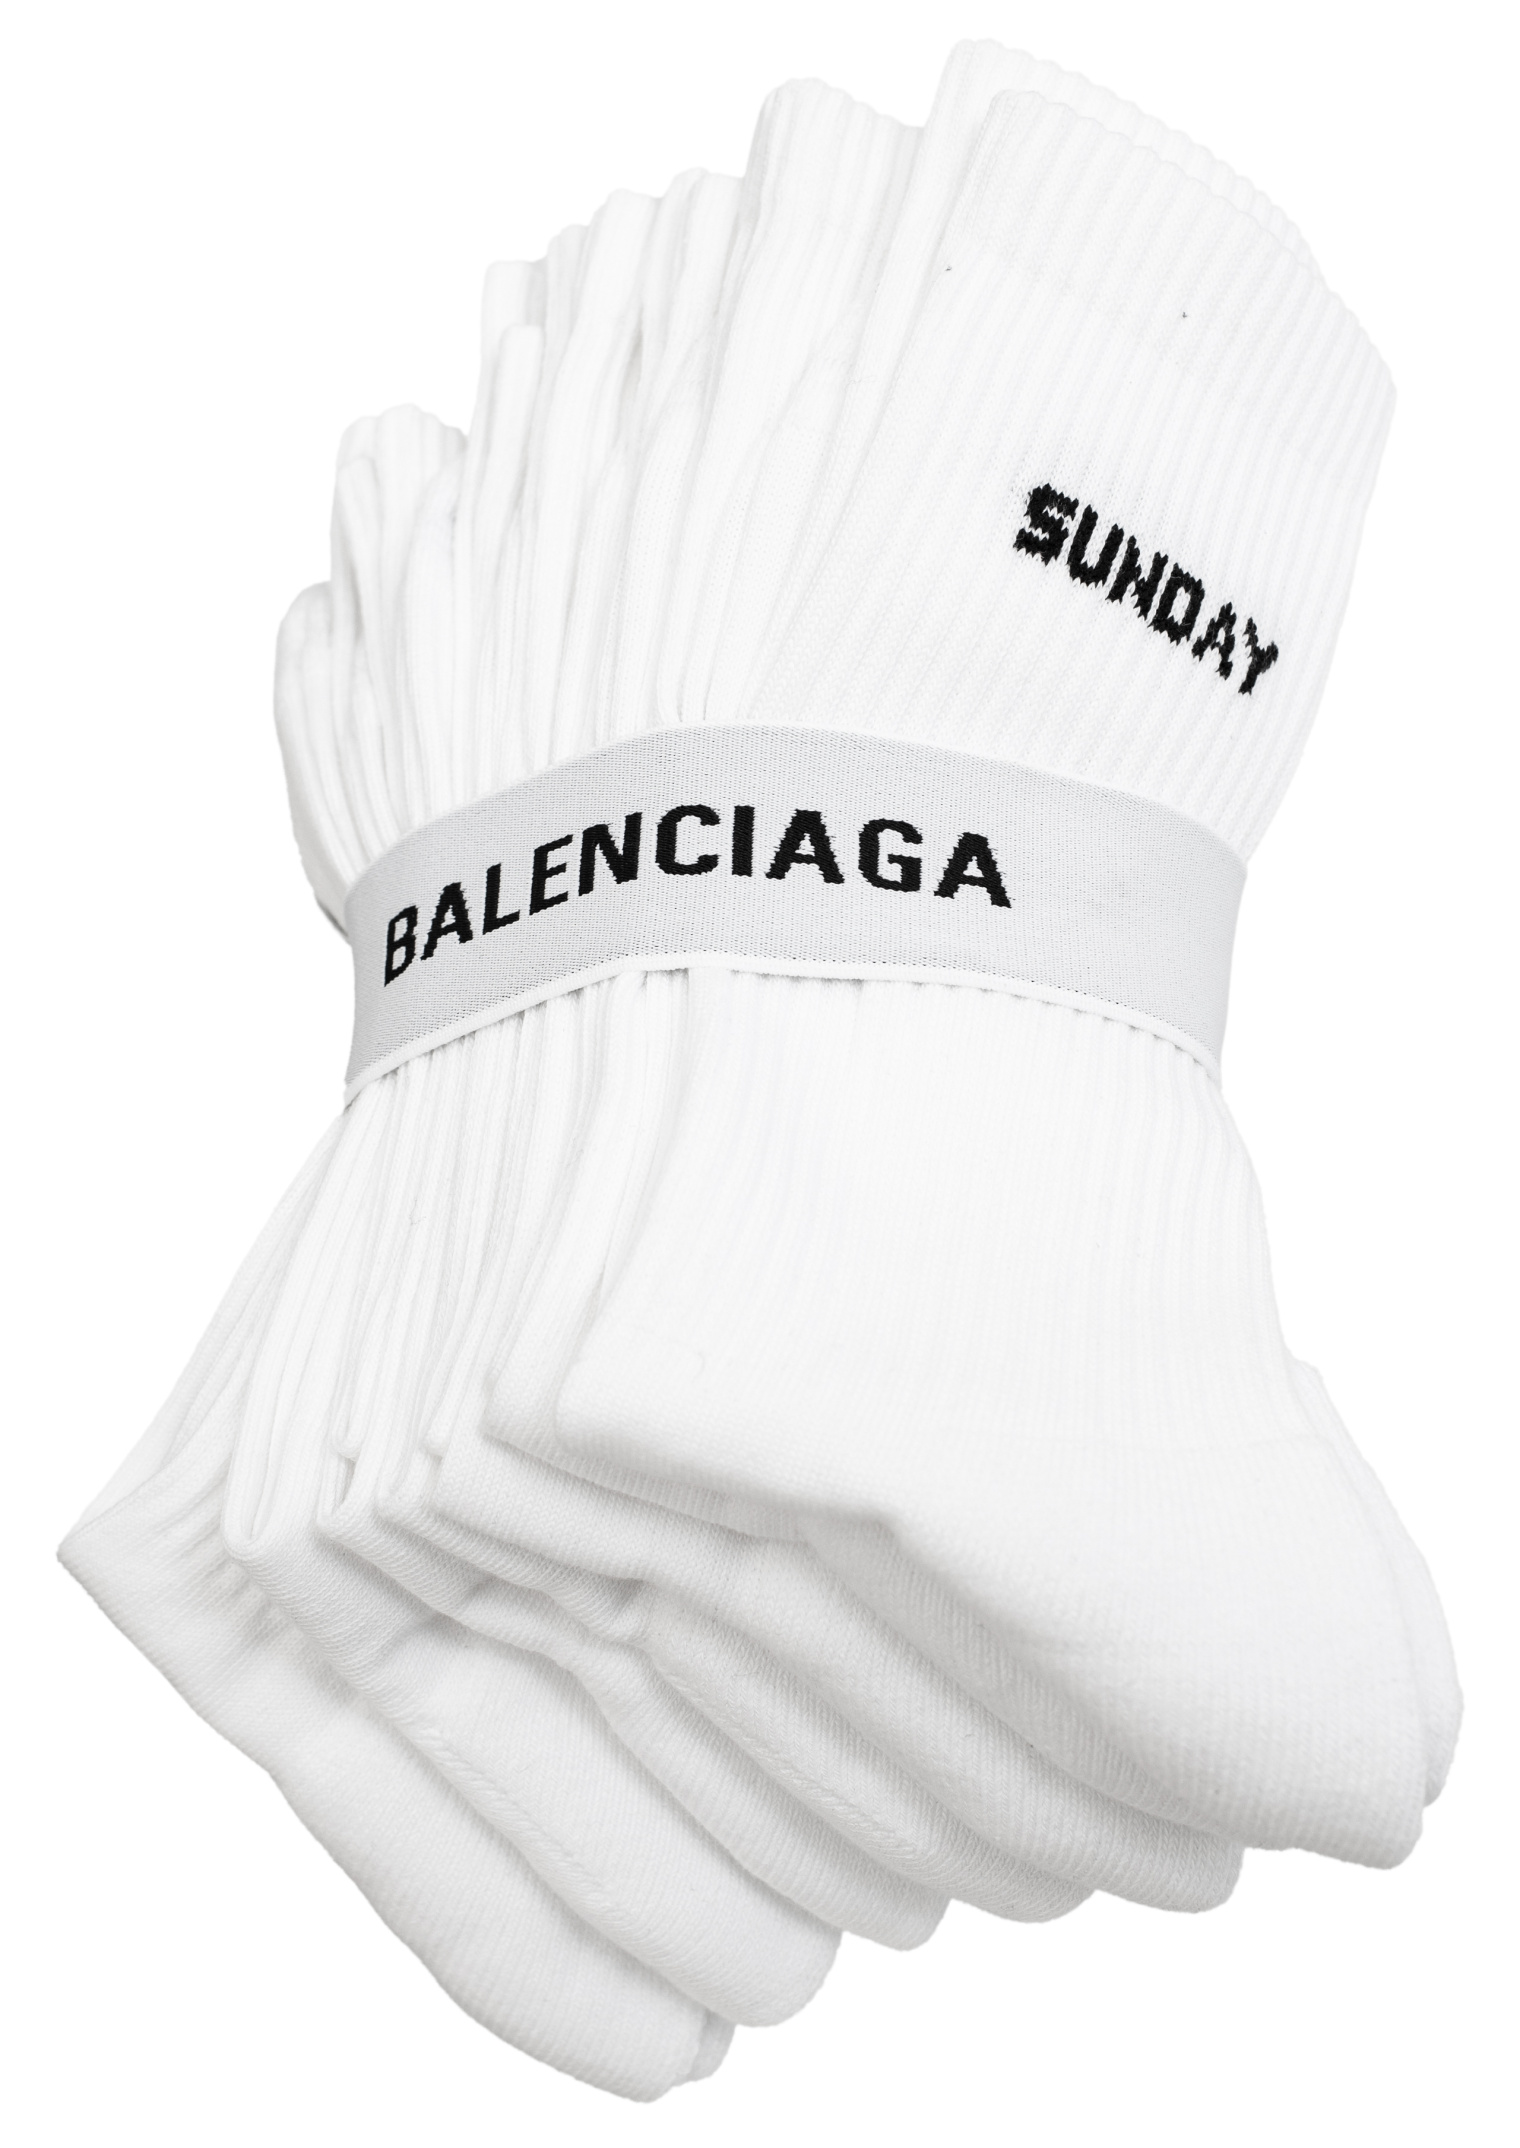 Balenciaga 7 Days Socks Pack in white